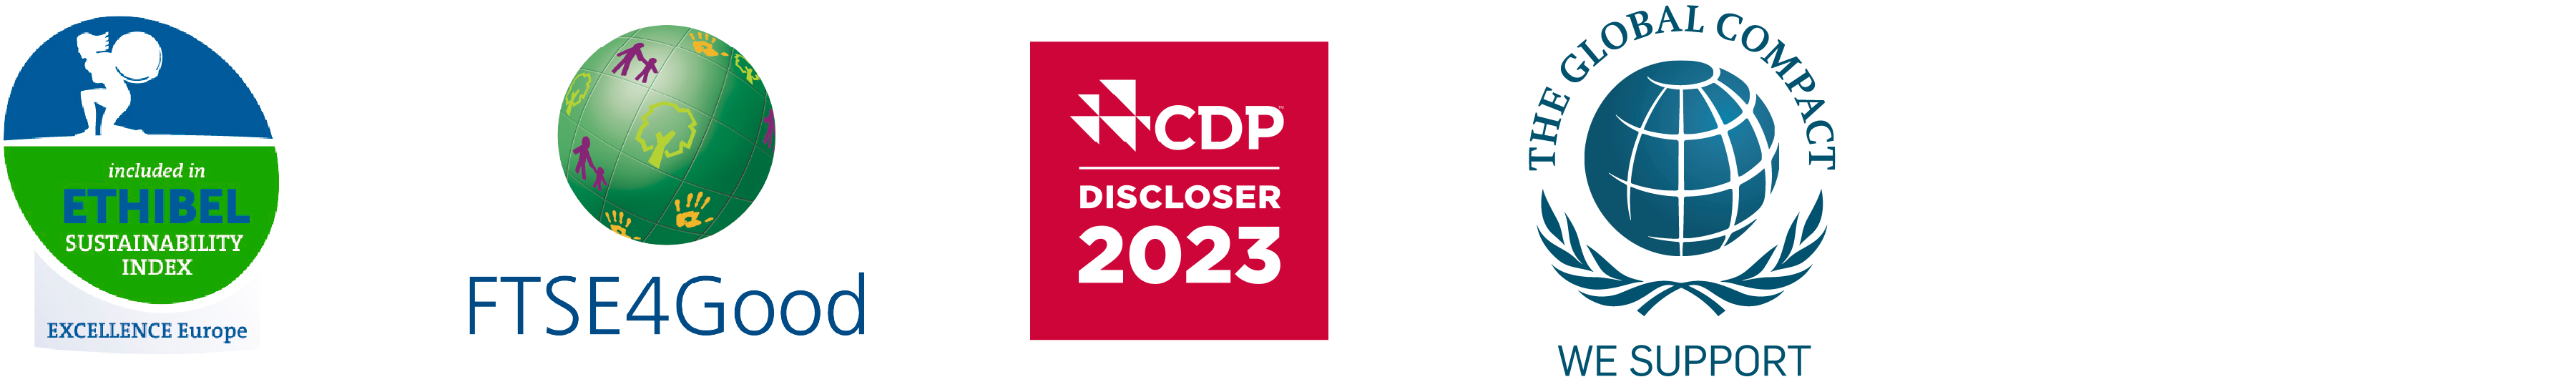 Ethibel Sustainability Indices, FTSE4Good, CDP Discloser 2023, UN Global Compact och UN Global Compact (logos)